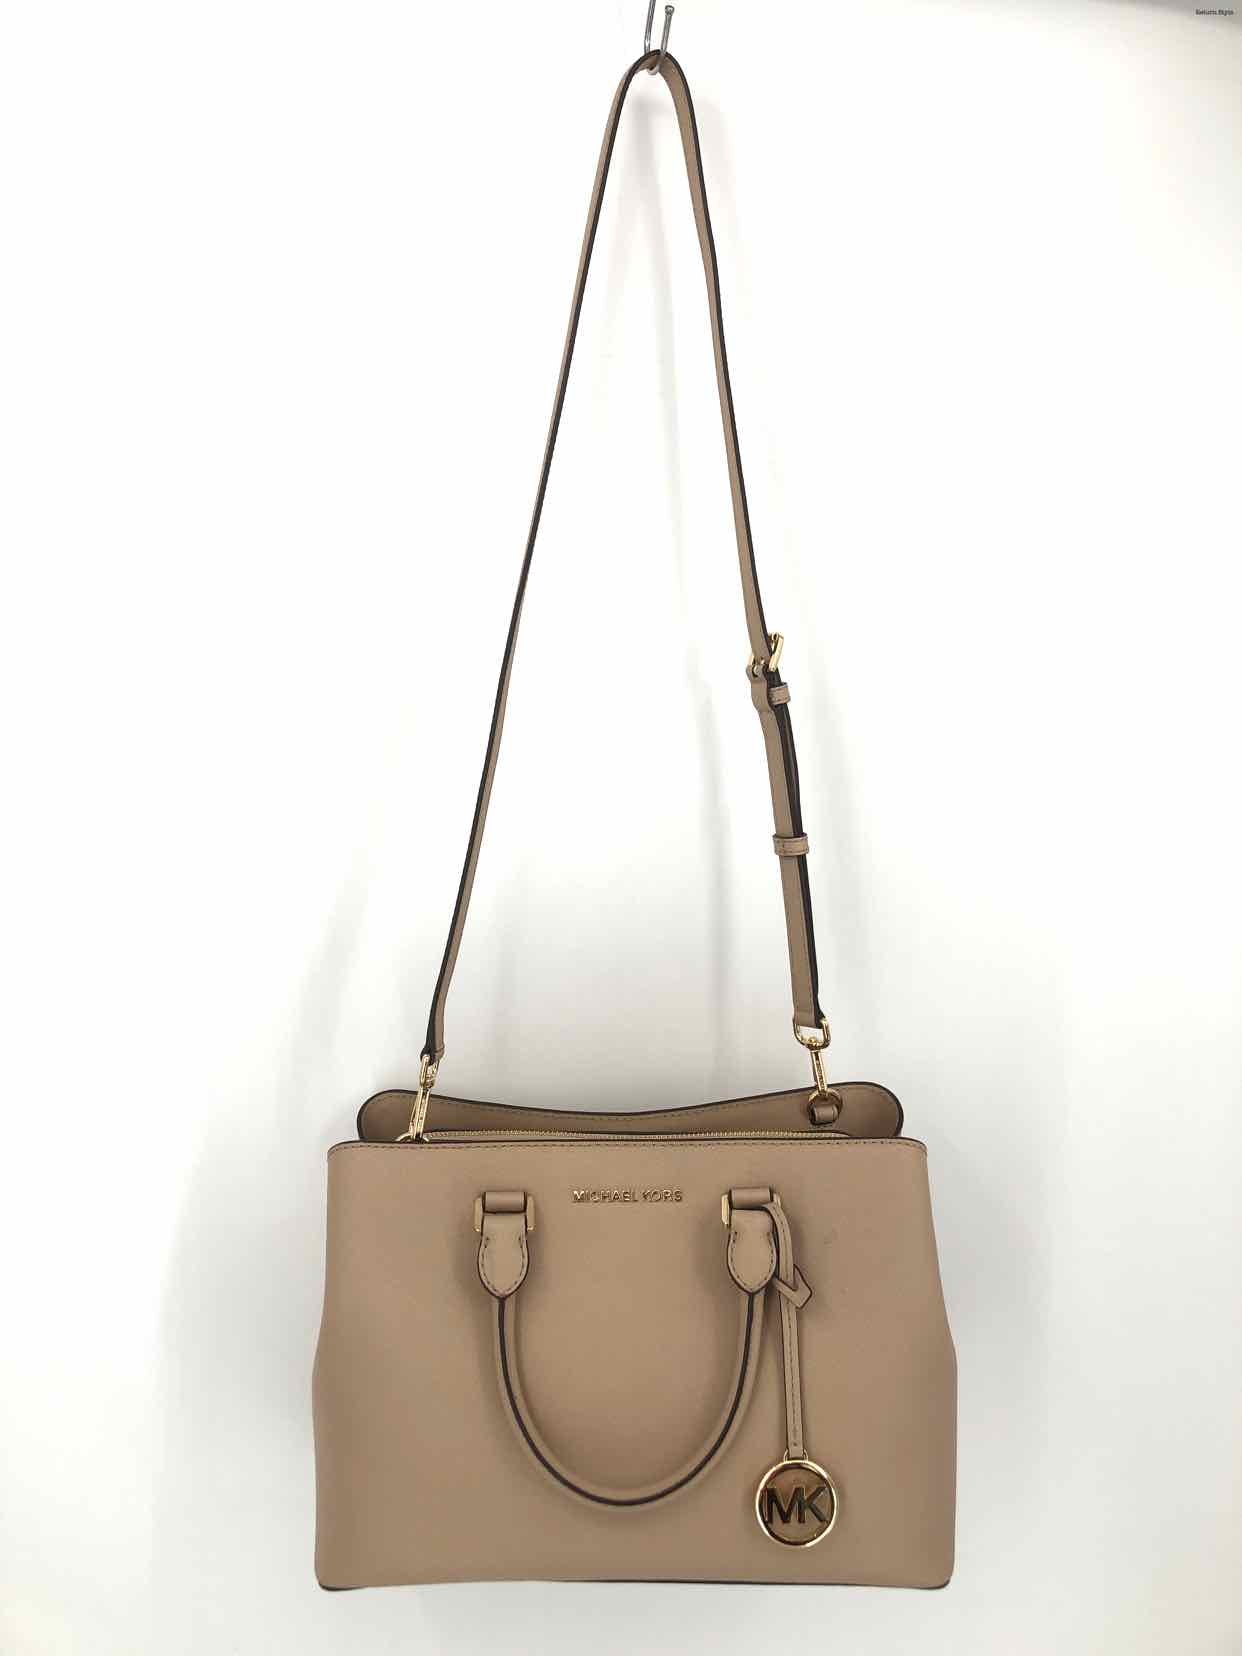 Michael kors leather bag - Women's handbags